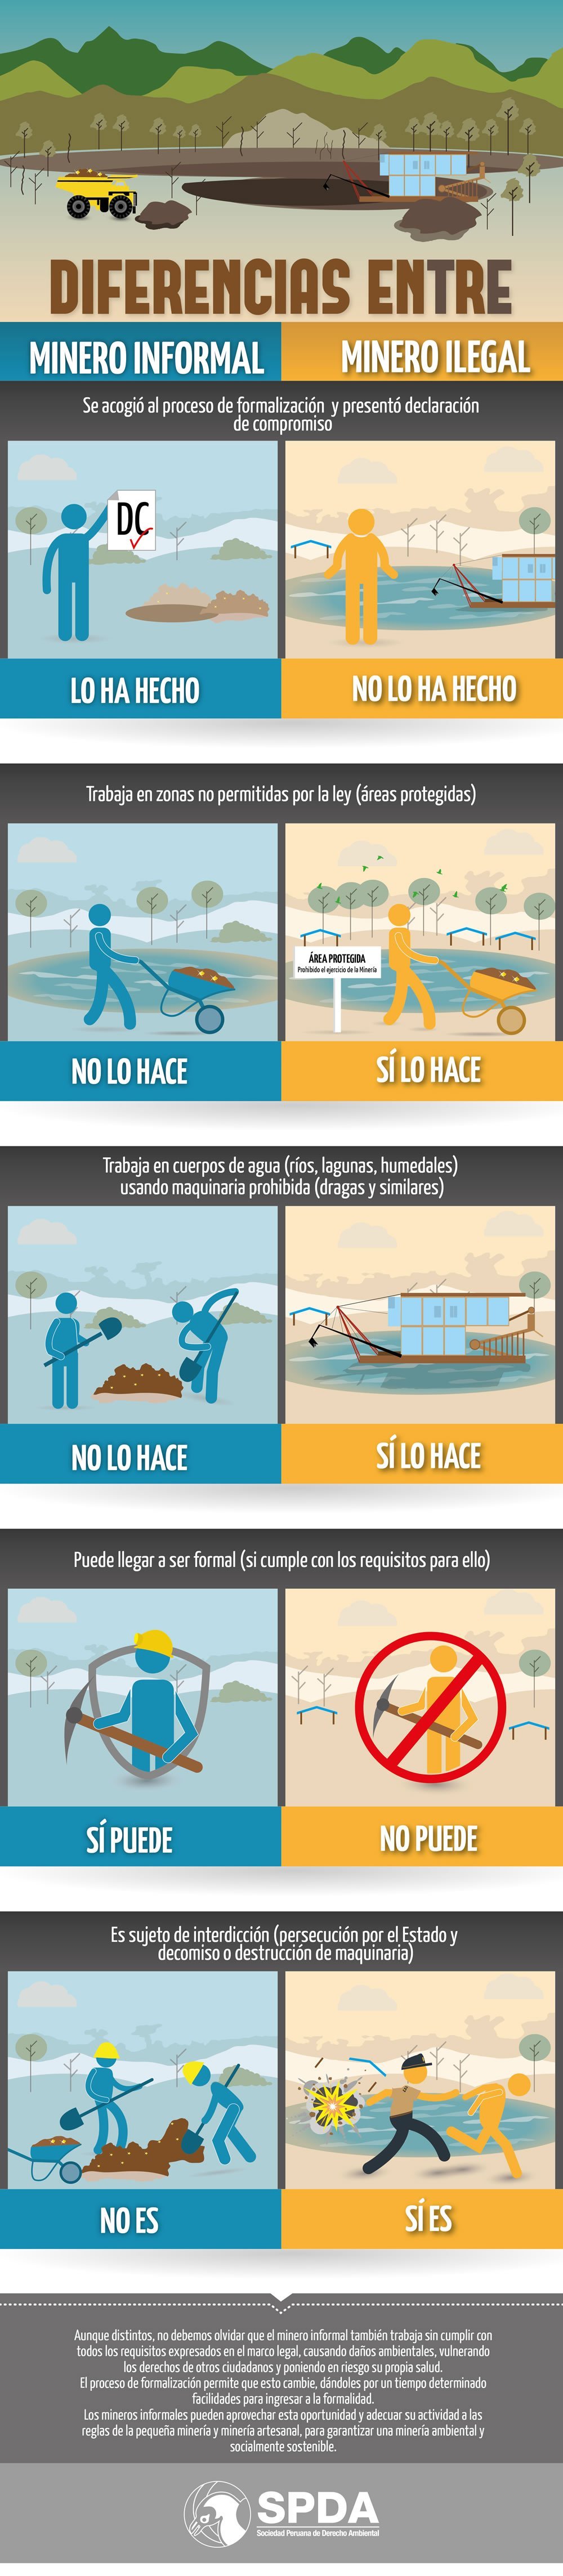 infografia_diferencias_minero